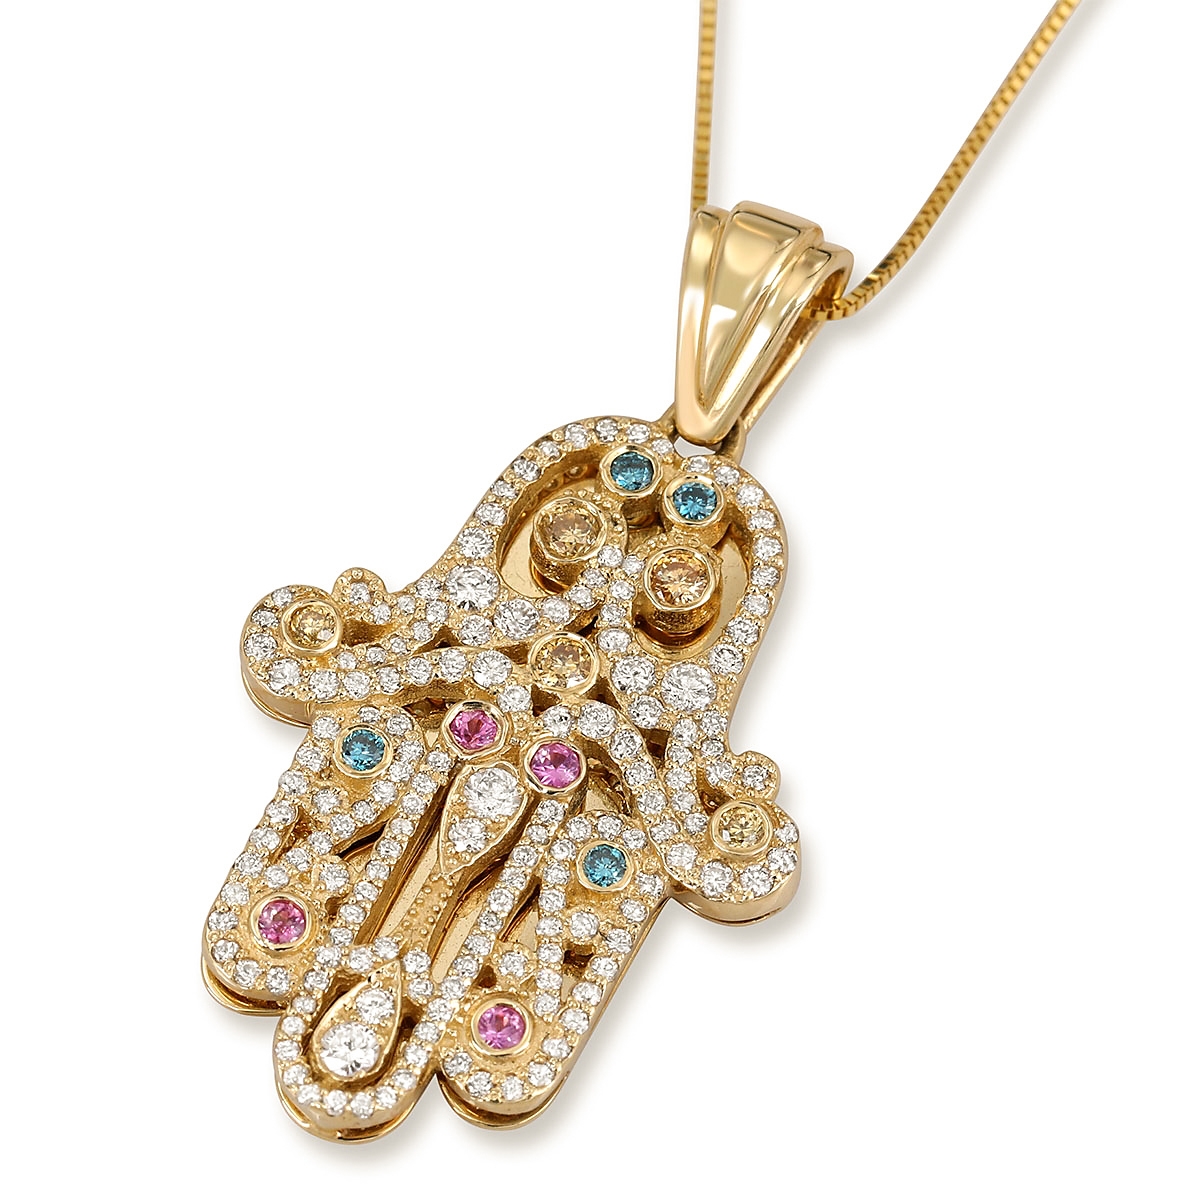 14K Gold and Gemstones Diamond Ornate Hamsa Pendant Necklace  - 1